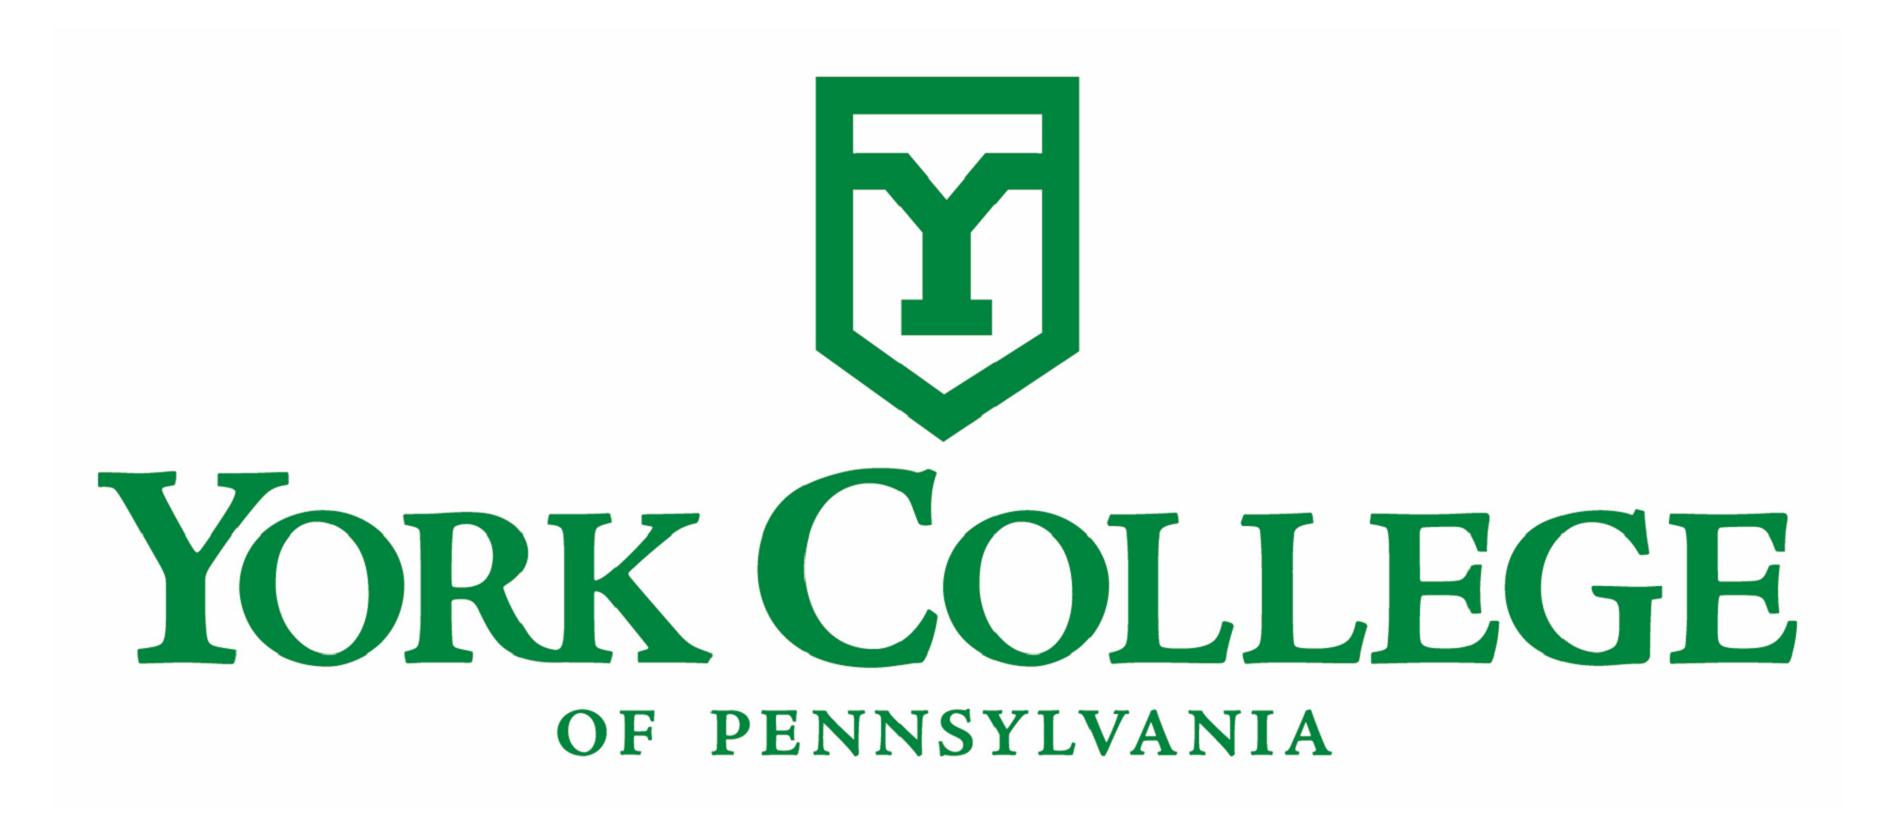 York College of Pennsylvania Student Priorities University Innovation